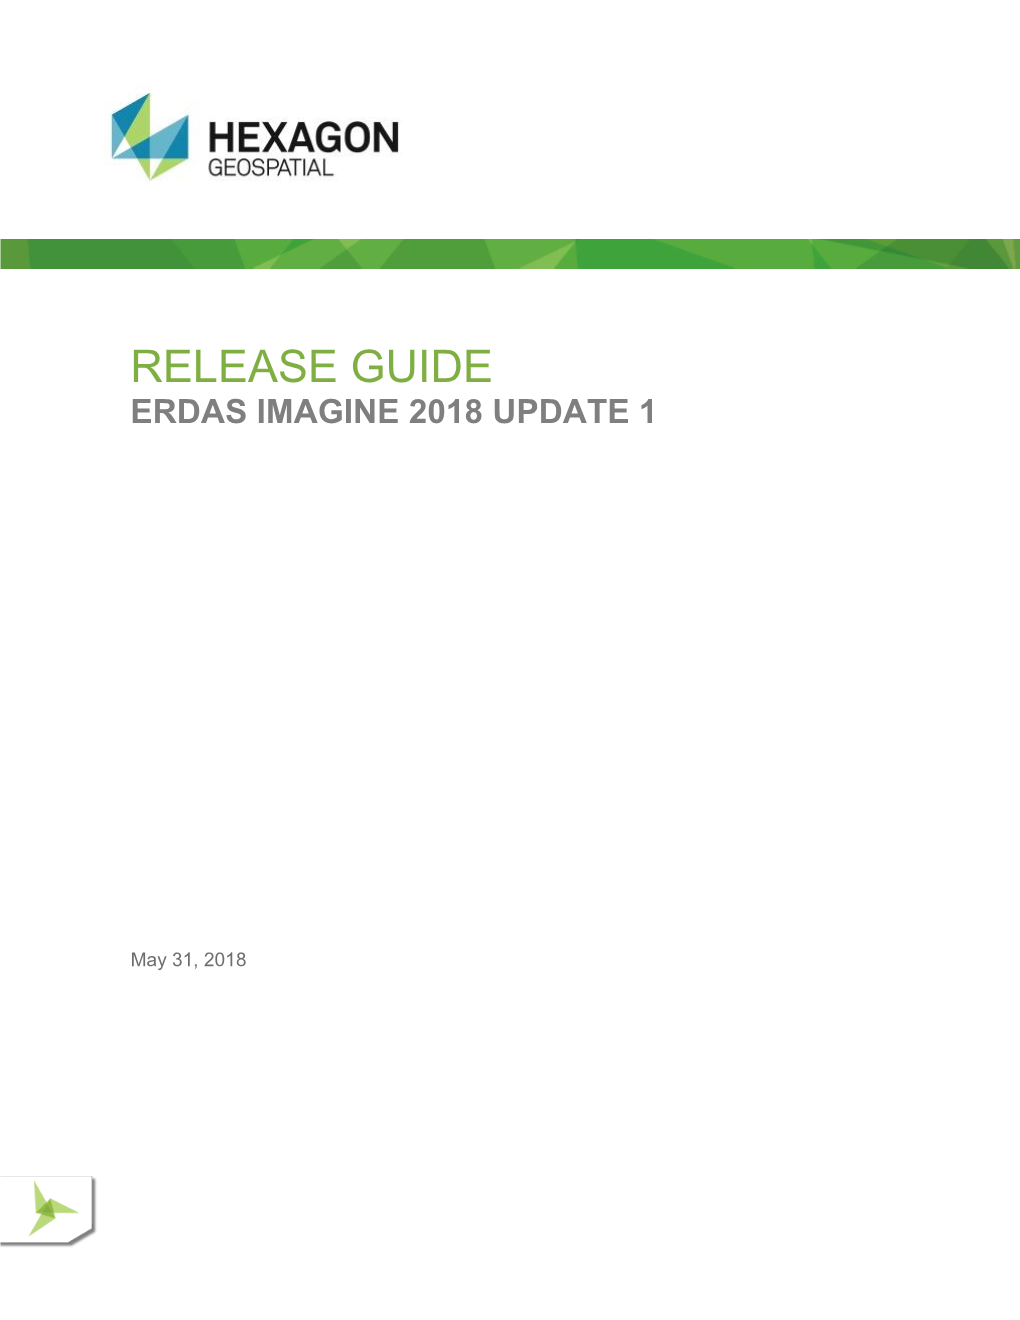 Release Guide for ERDAS IMAGINE 2018 Update 1